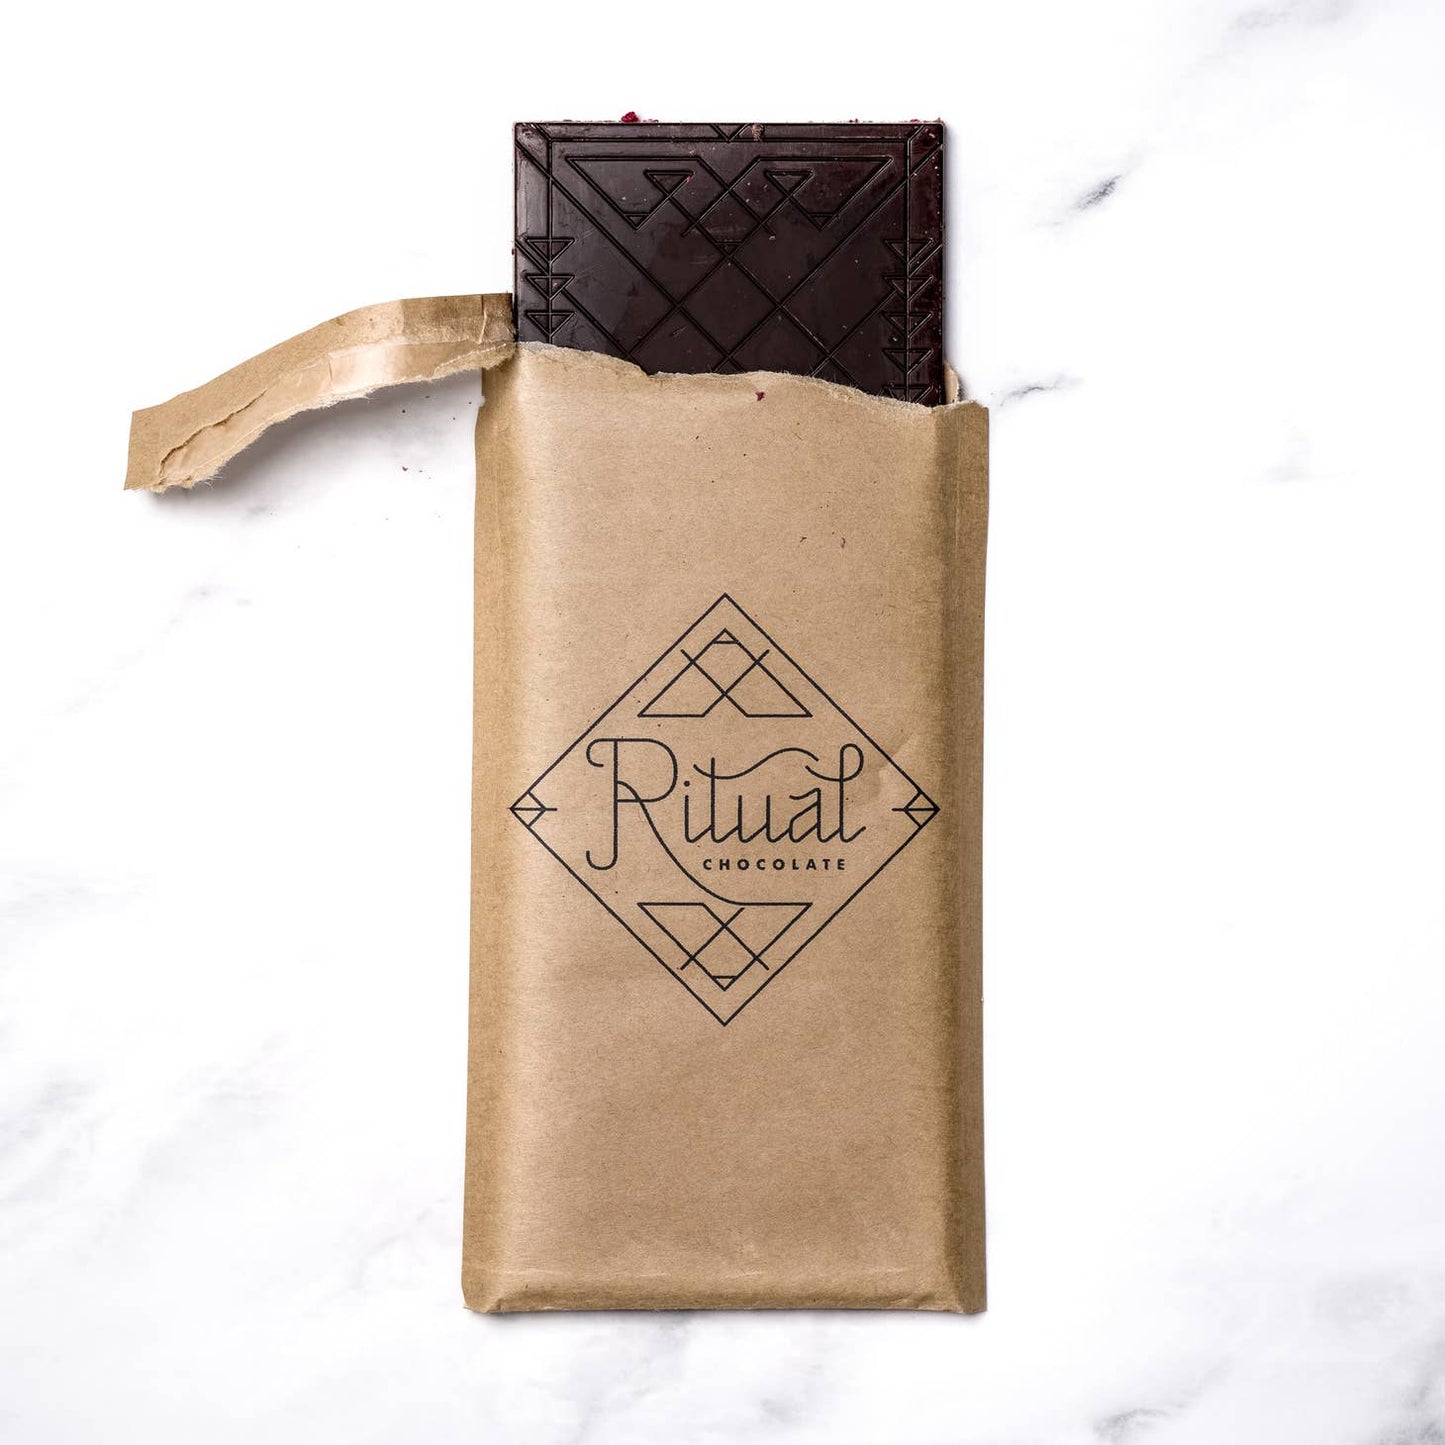 Ritual Chocolate - S'more Chocolate, 70% Cacao